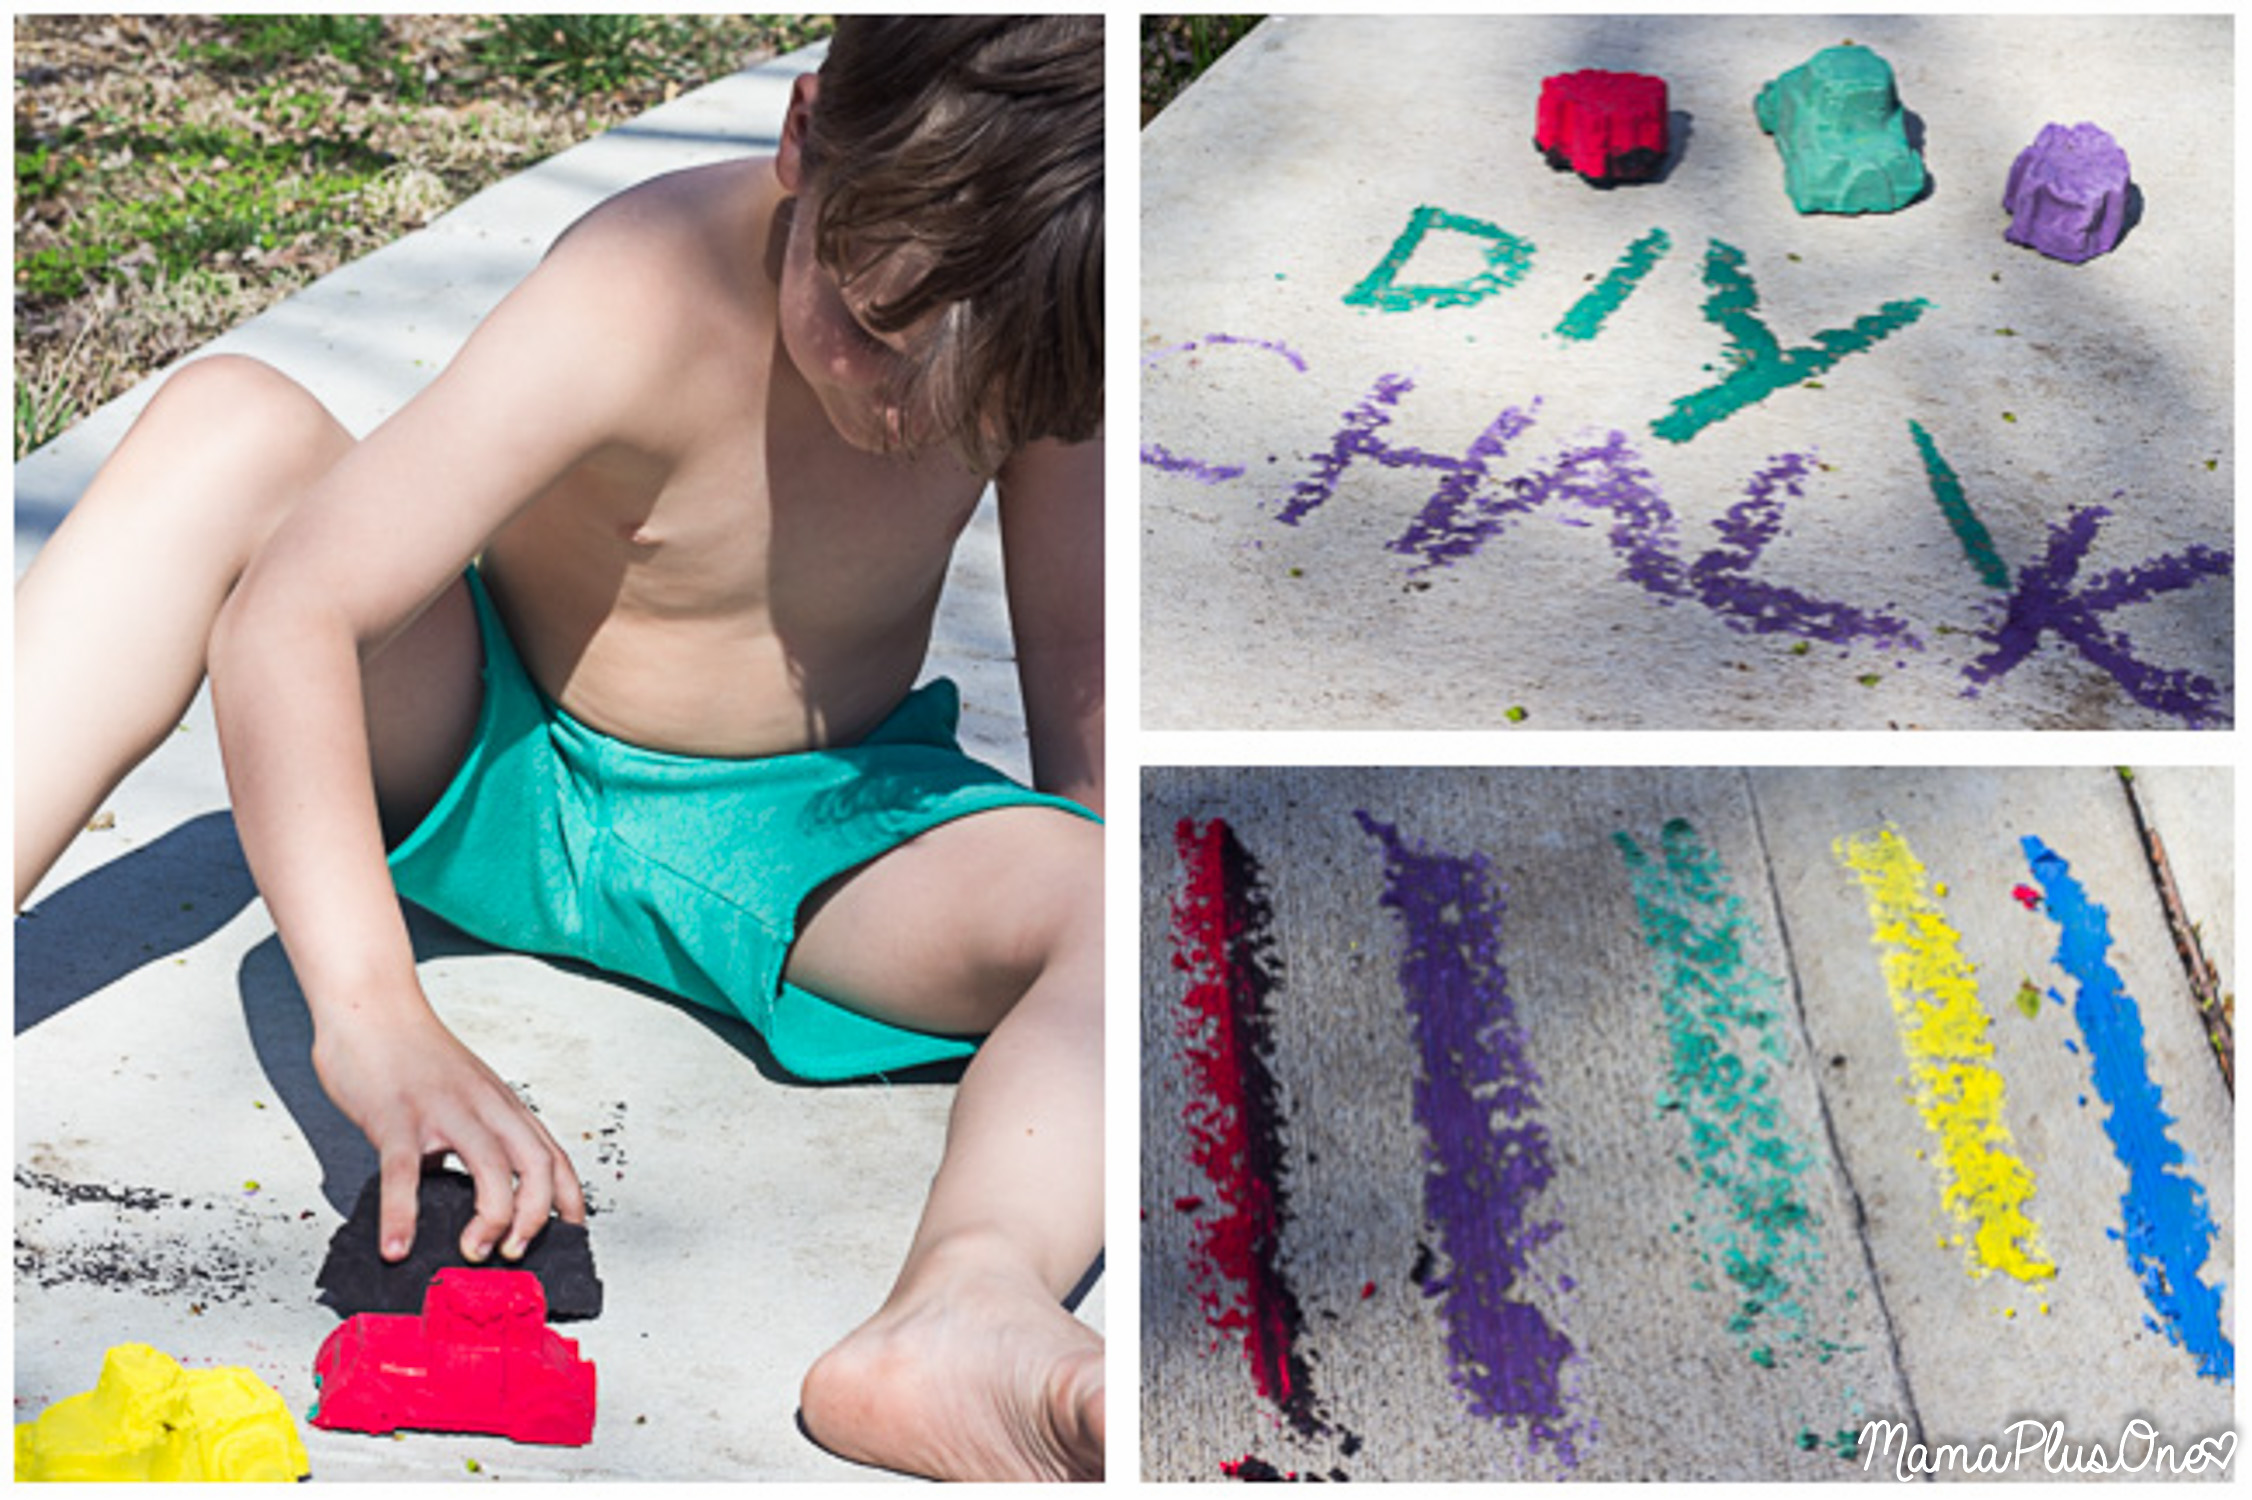 Make Your Own Sidewalk Chalk! Easy DIY for Kids 